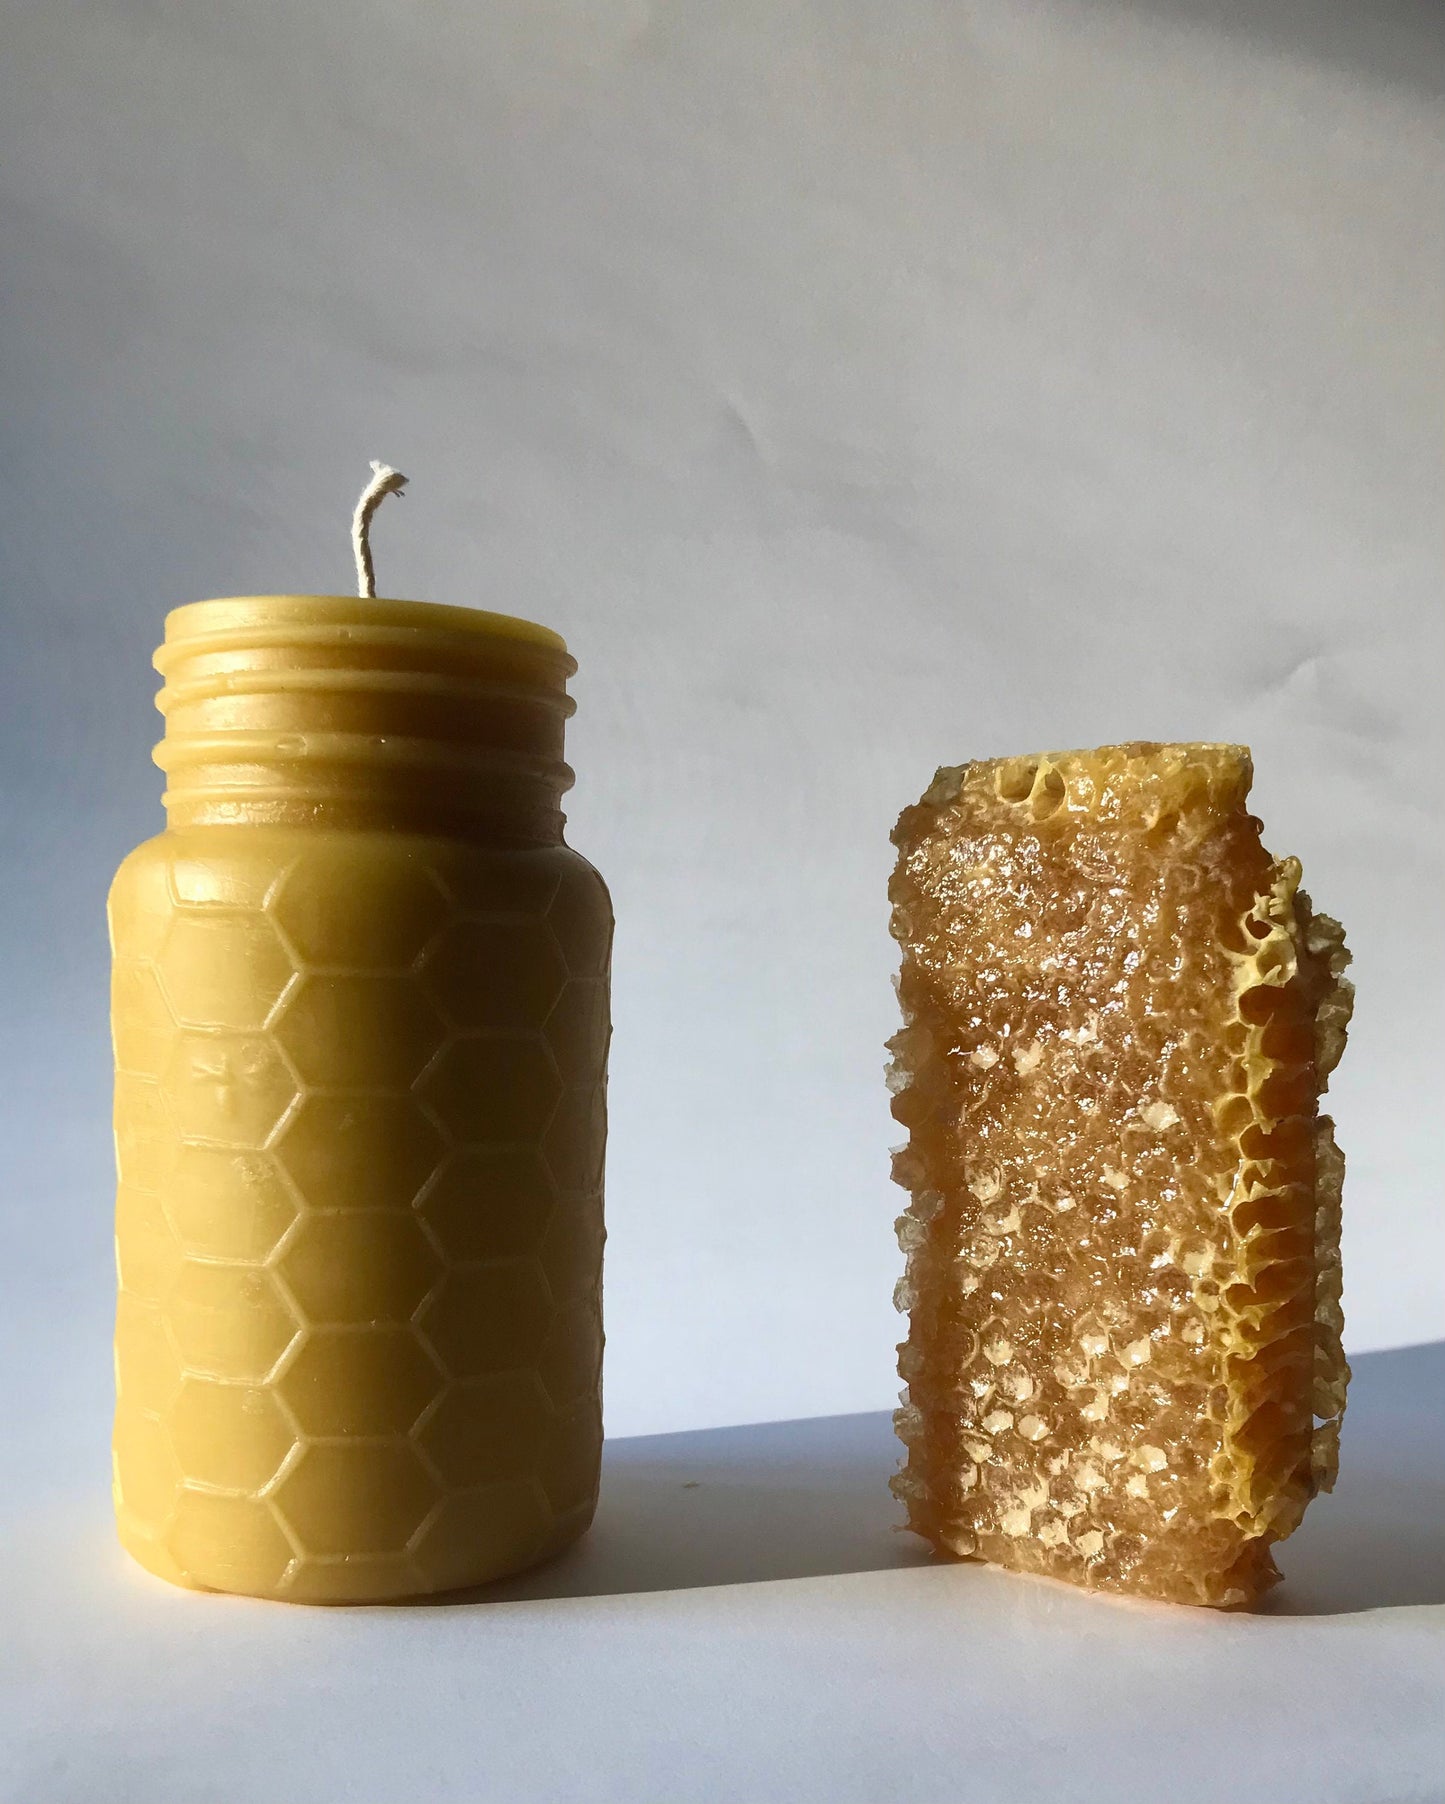 Transylvanian Soviet-Era Honey Bottle Candle in Pure Beeswax - Candle, Beeswax Candle, Bottle Candle - One of a Kind